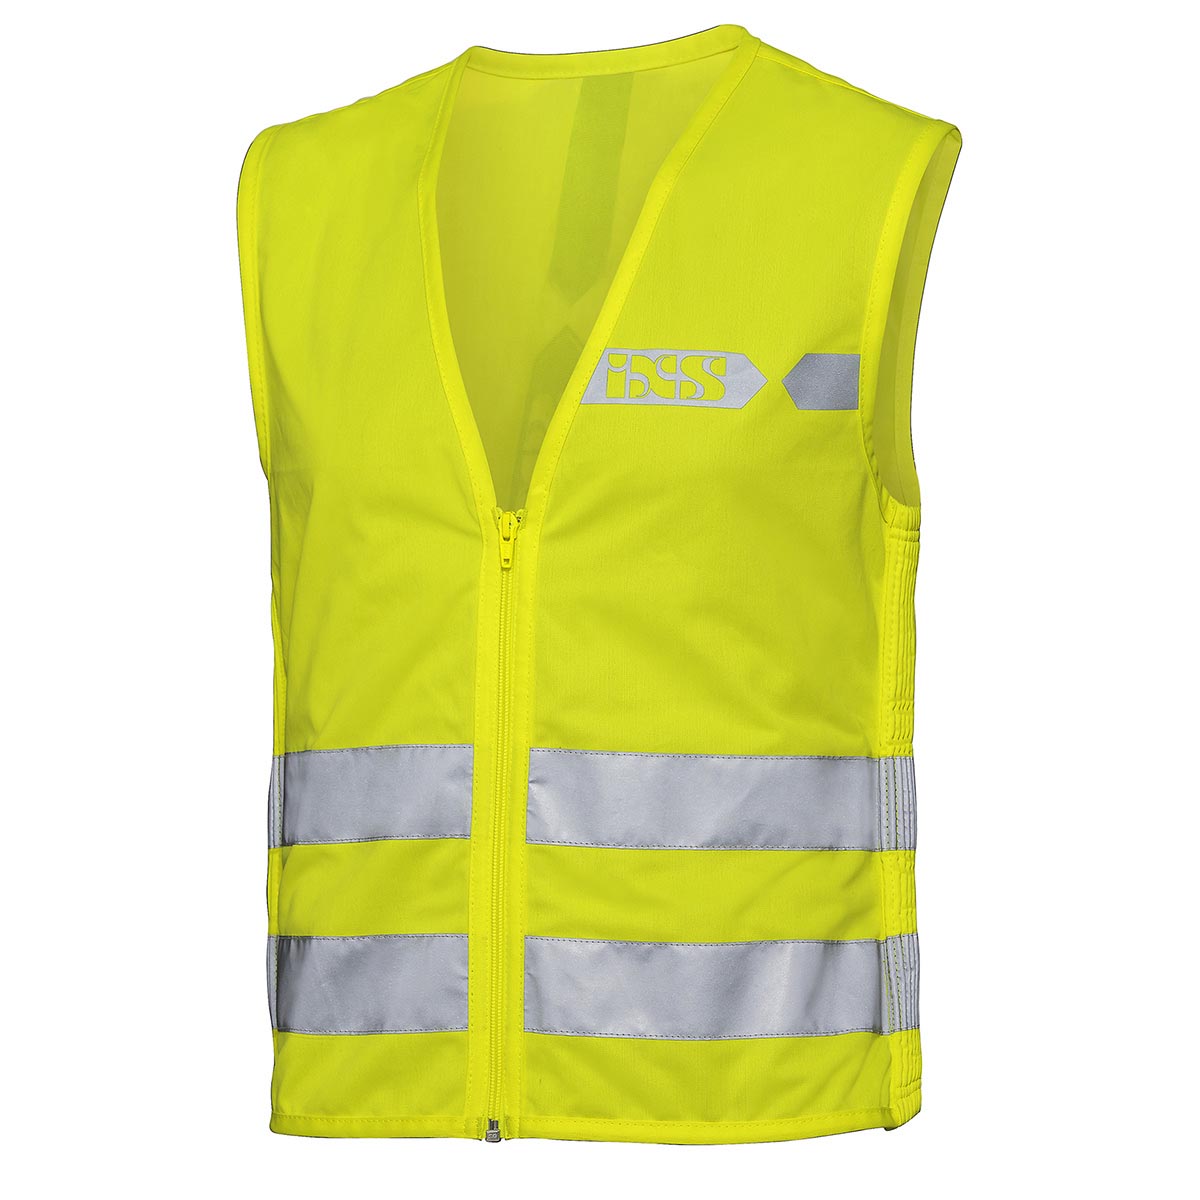 Neon Vest 3 fluo-yellow 3XL/4XL, Vests, Accessories